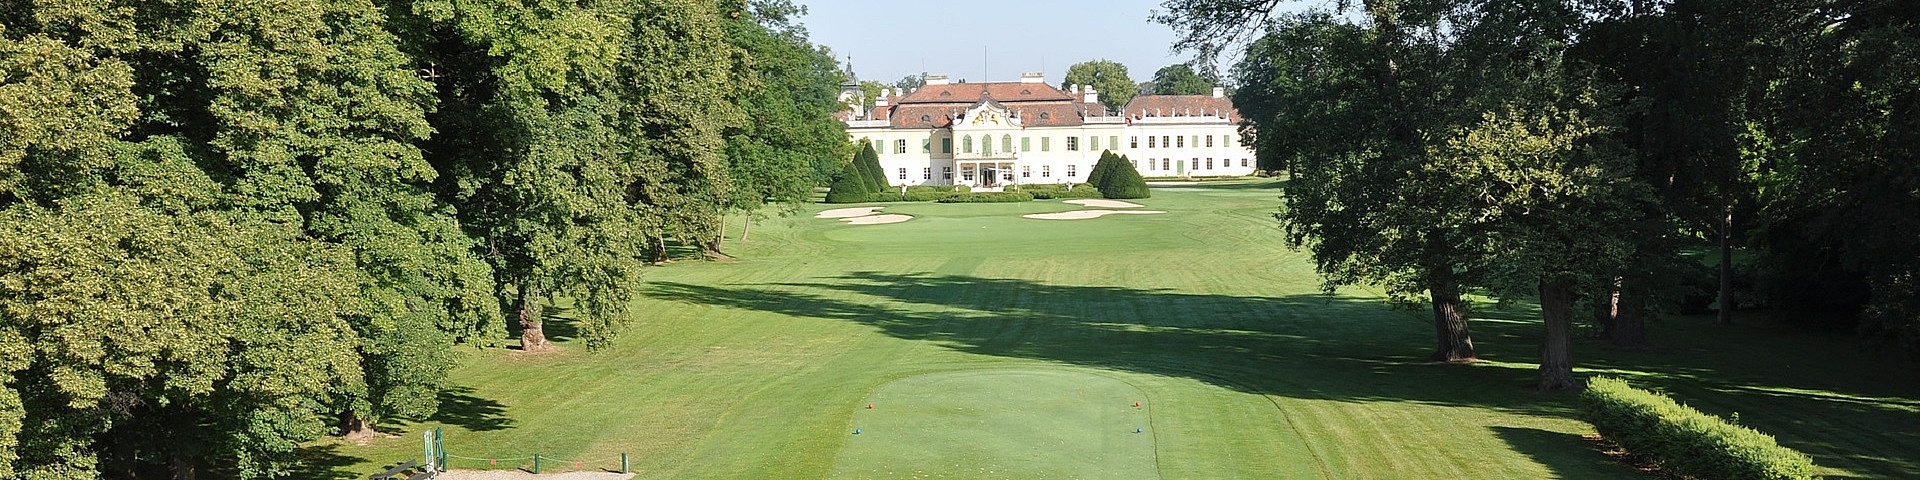 Golfclub Schloss Schönborn